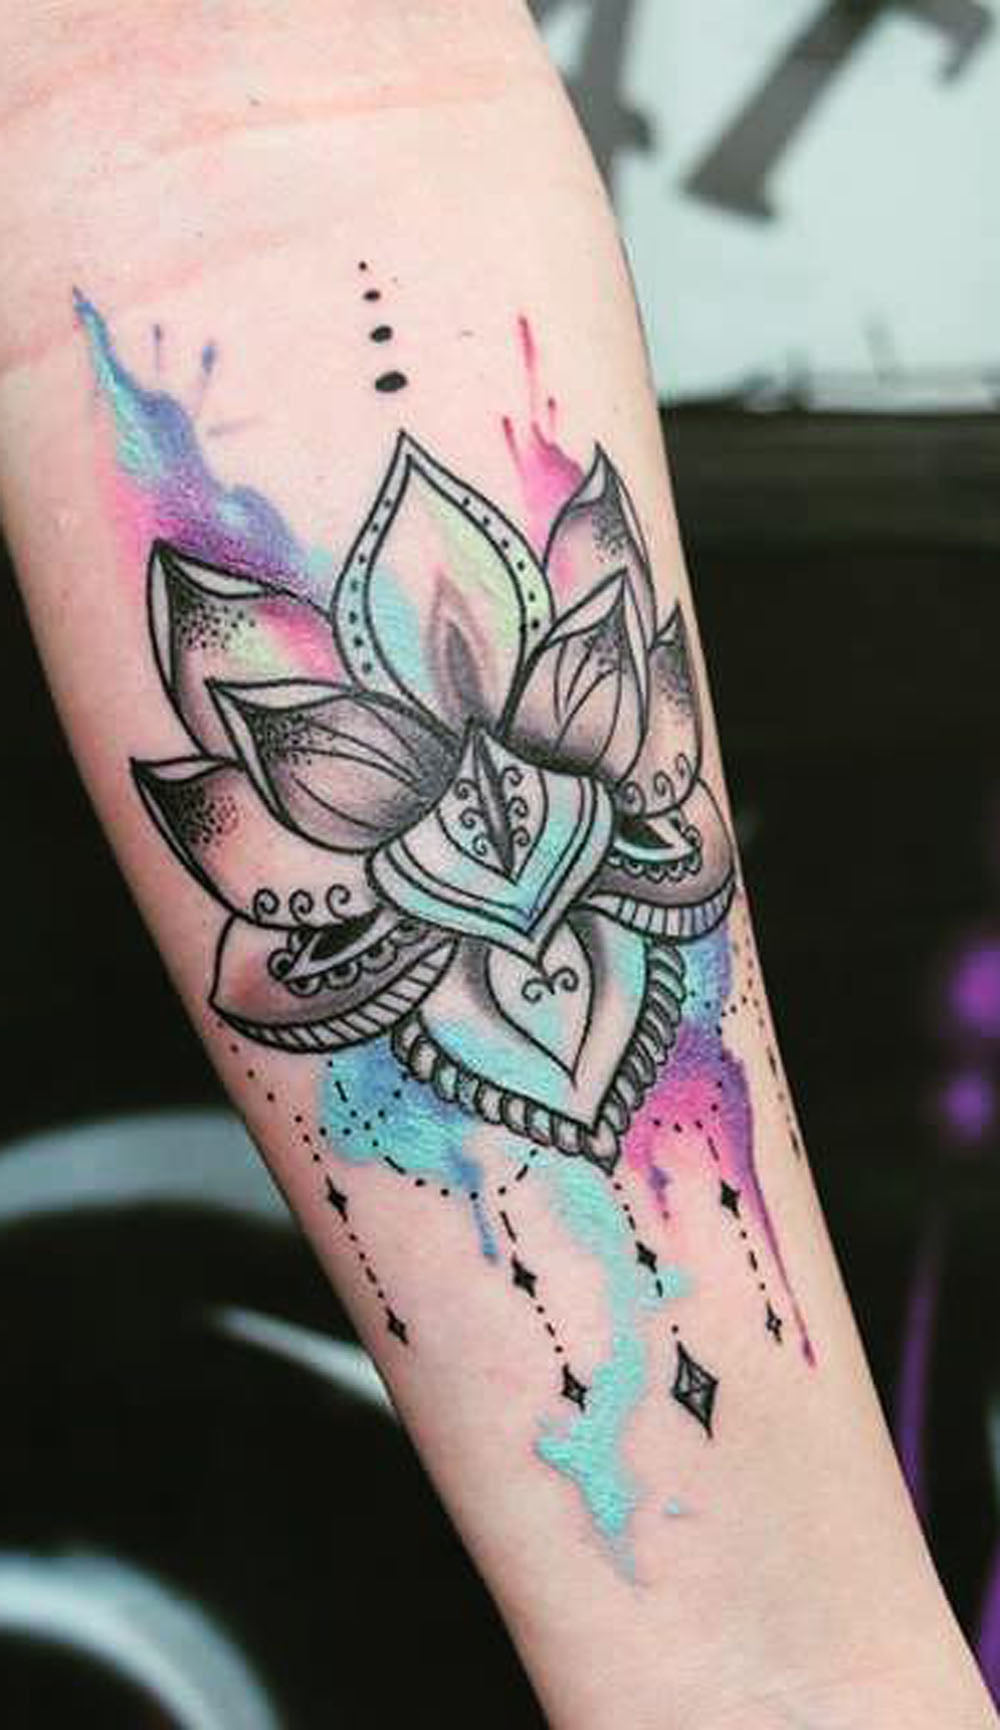 Watercolor Lotus Mandala Forearm Arm Sleeve Tattoo Ideas for Women - www.MyBodiArt.com 